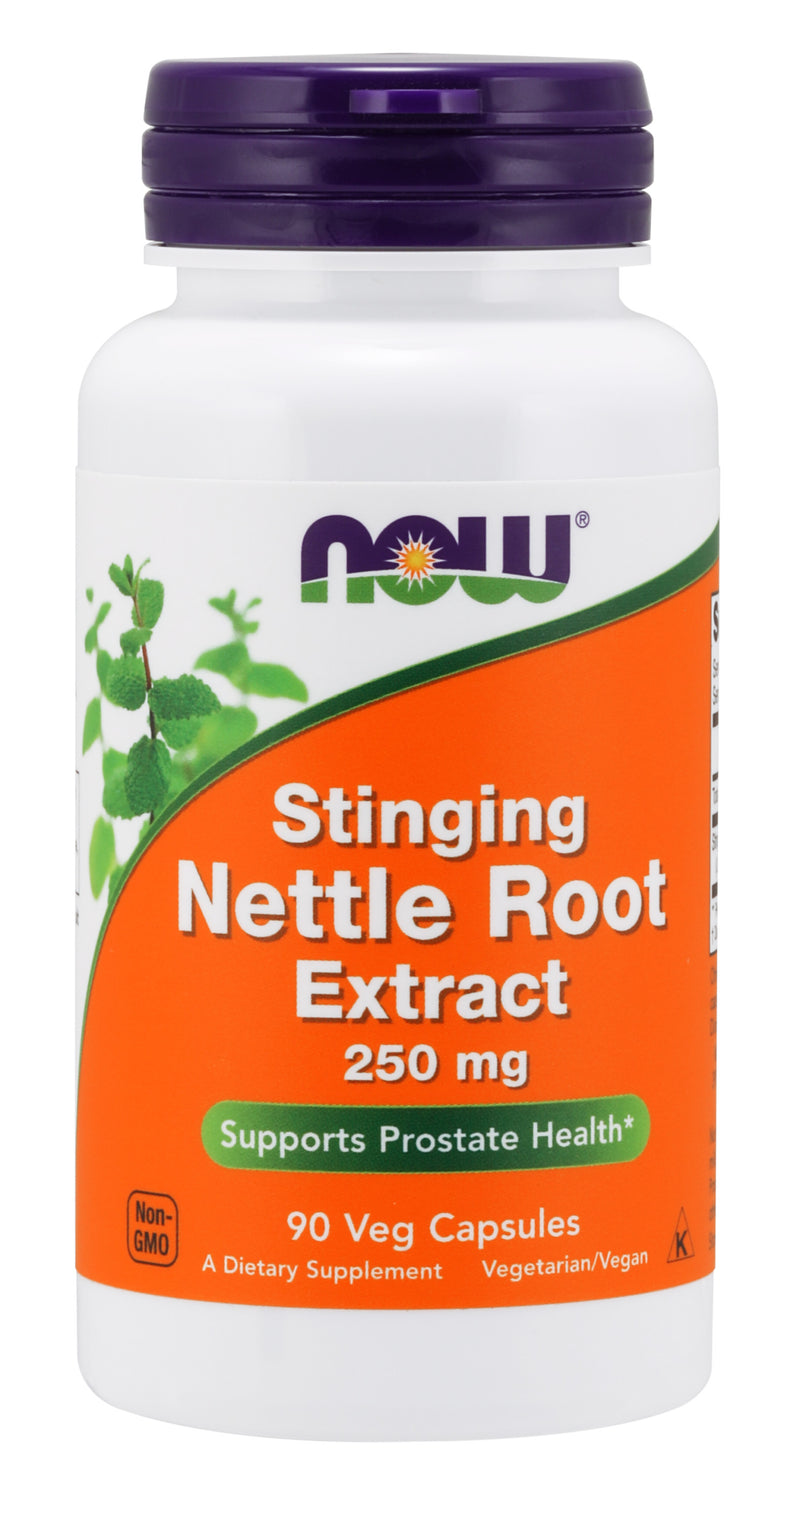 Stinging Nettle Root Extract 250 mg 90 Veg Capsules